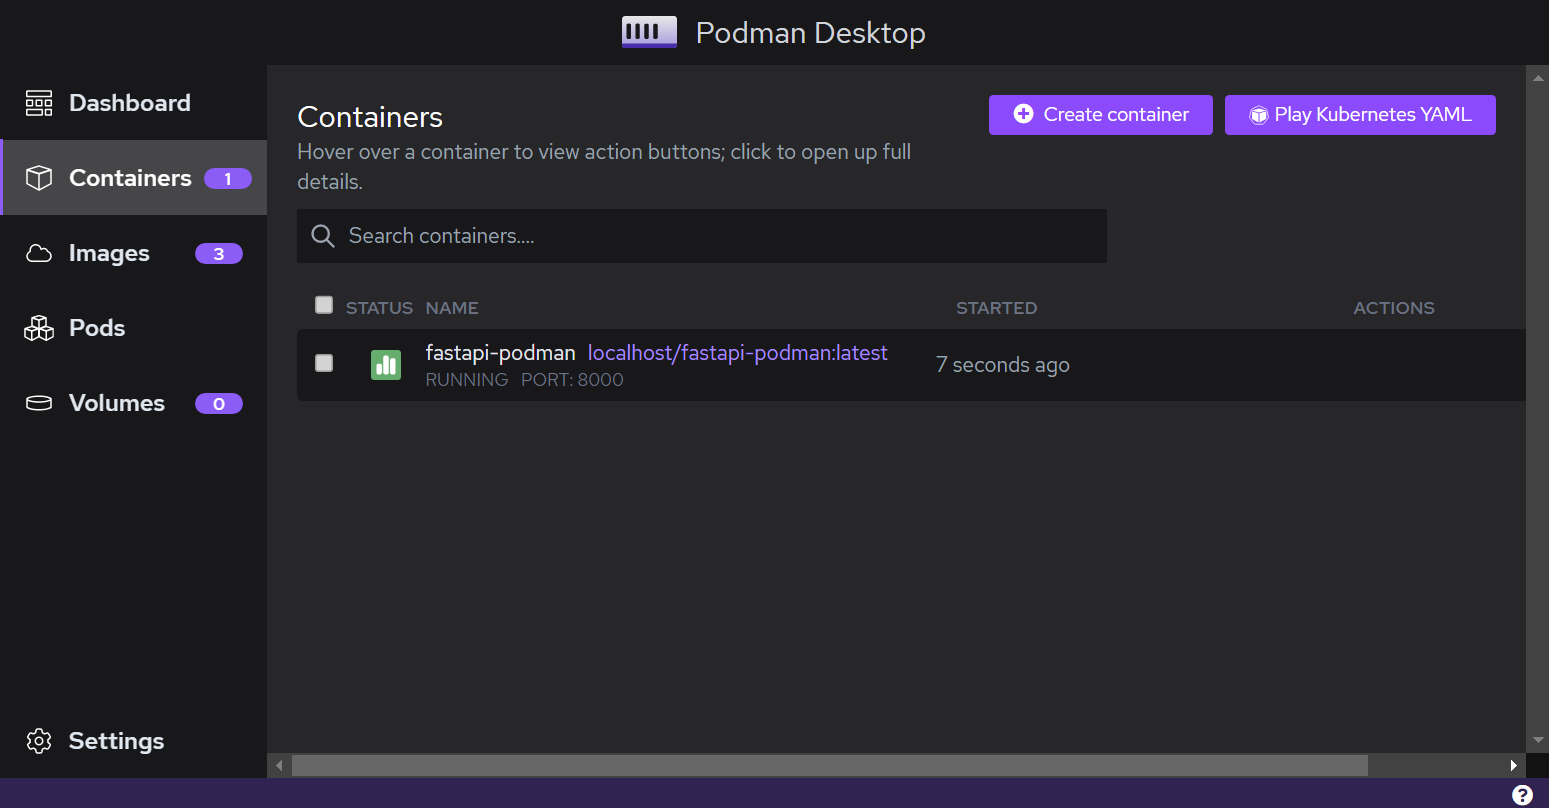 Podman Desktop showing a running FastAPI container